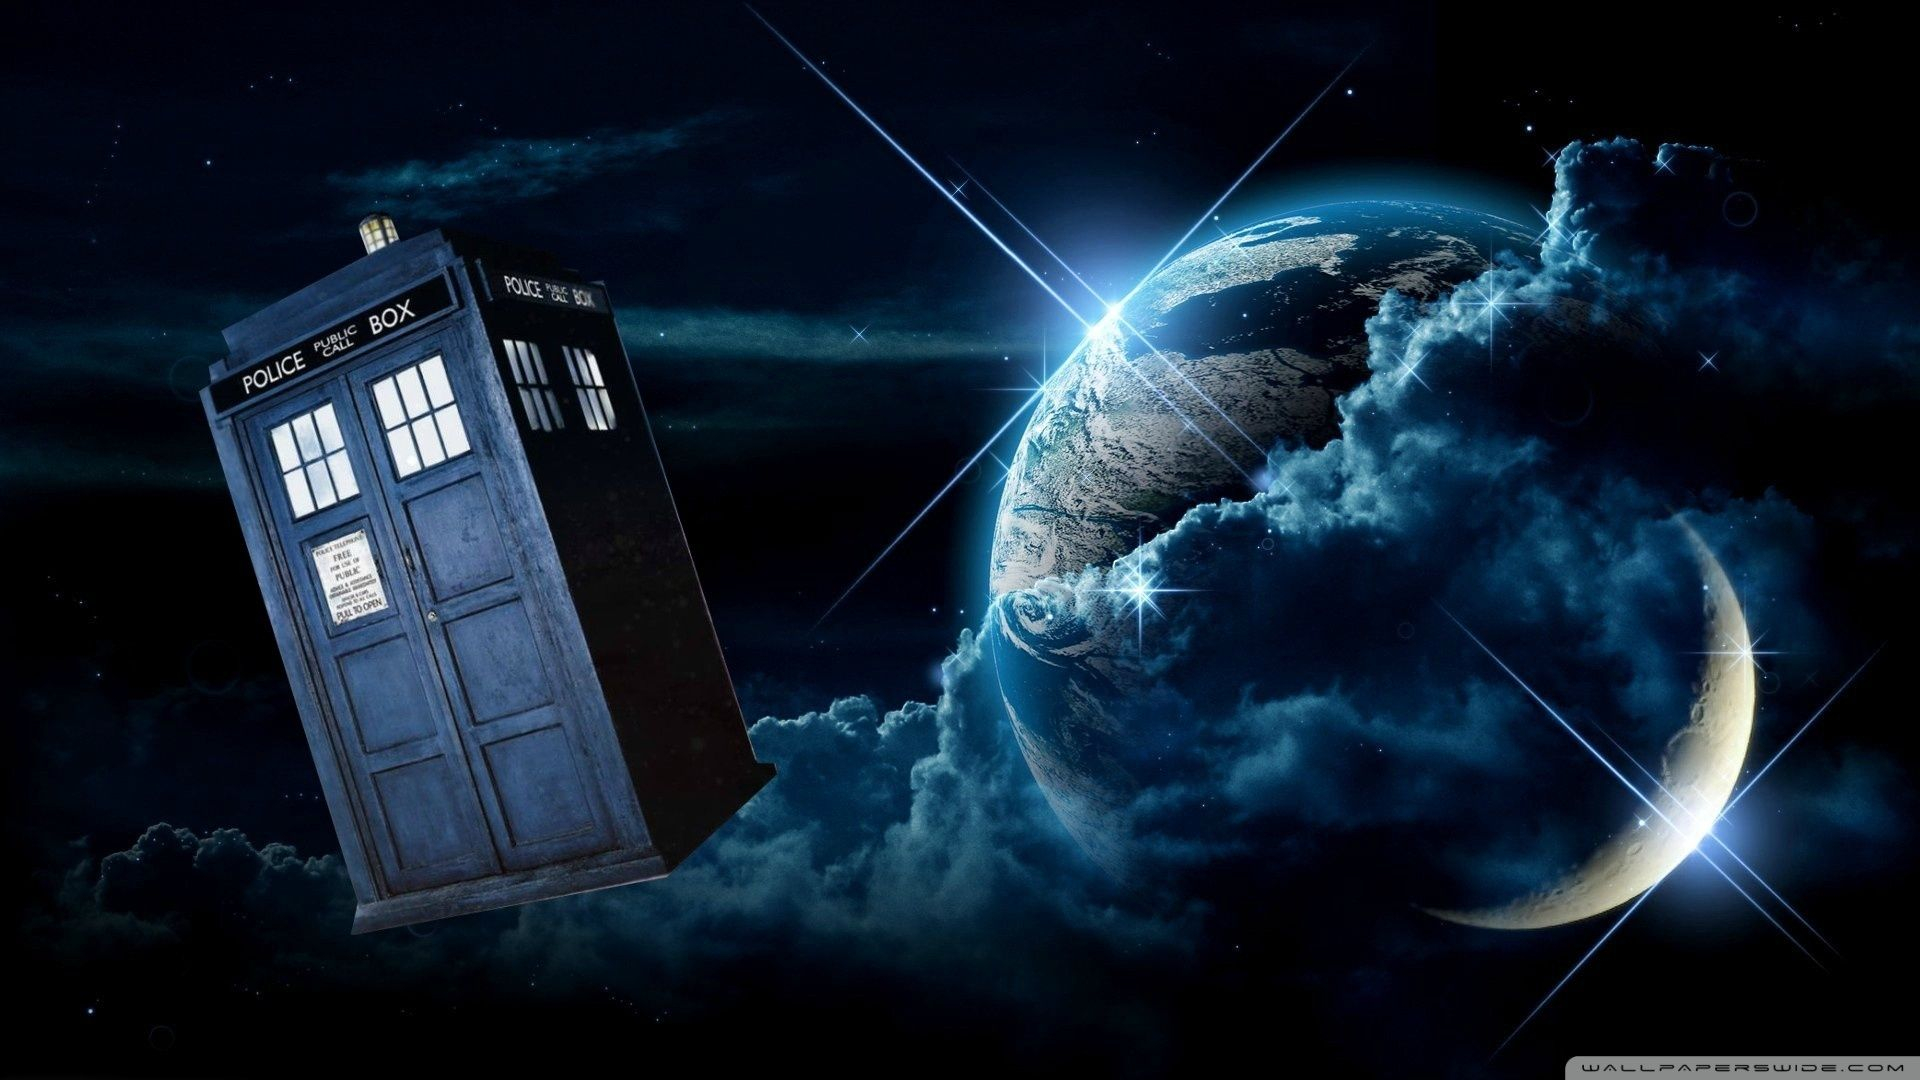 1920x1080 10 Best Dr Who Wallpaper Tardis FULL HD 1080p For PC Desktop | Doctor who wallpaper, Tardis wallpaper, Doctor who tardis